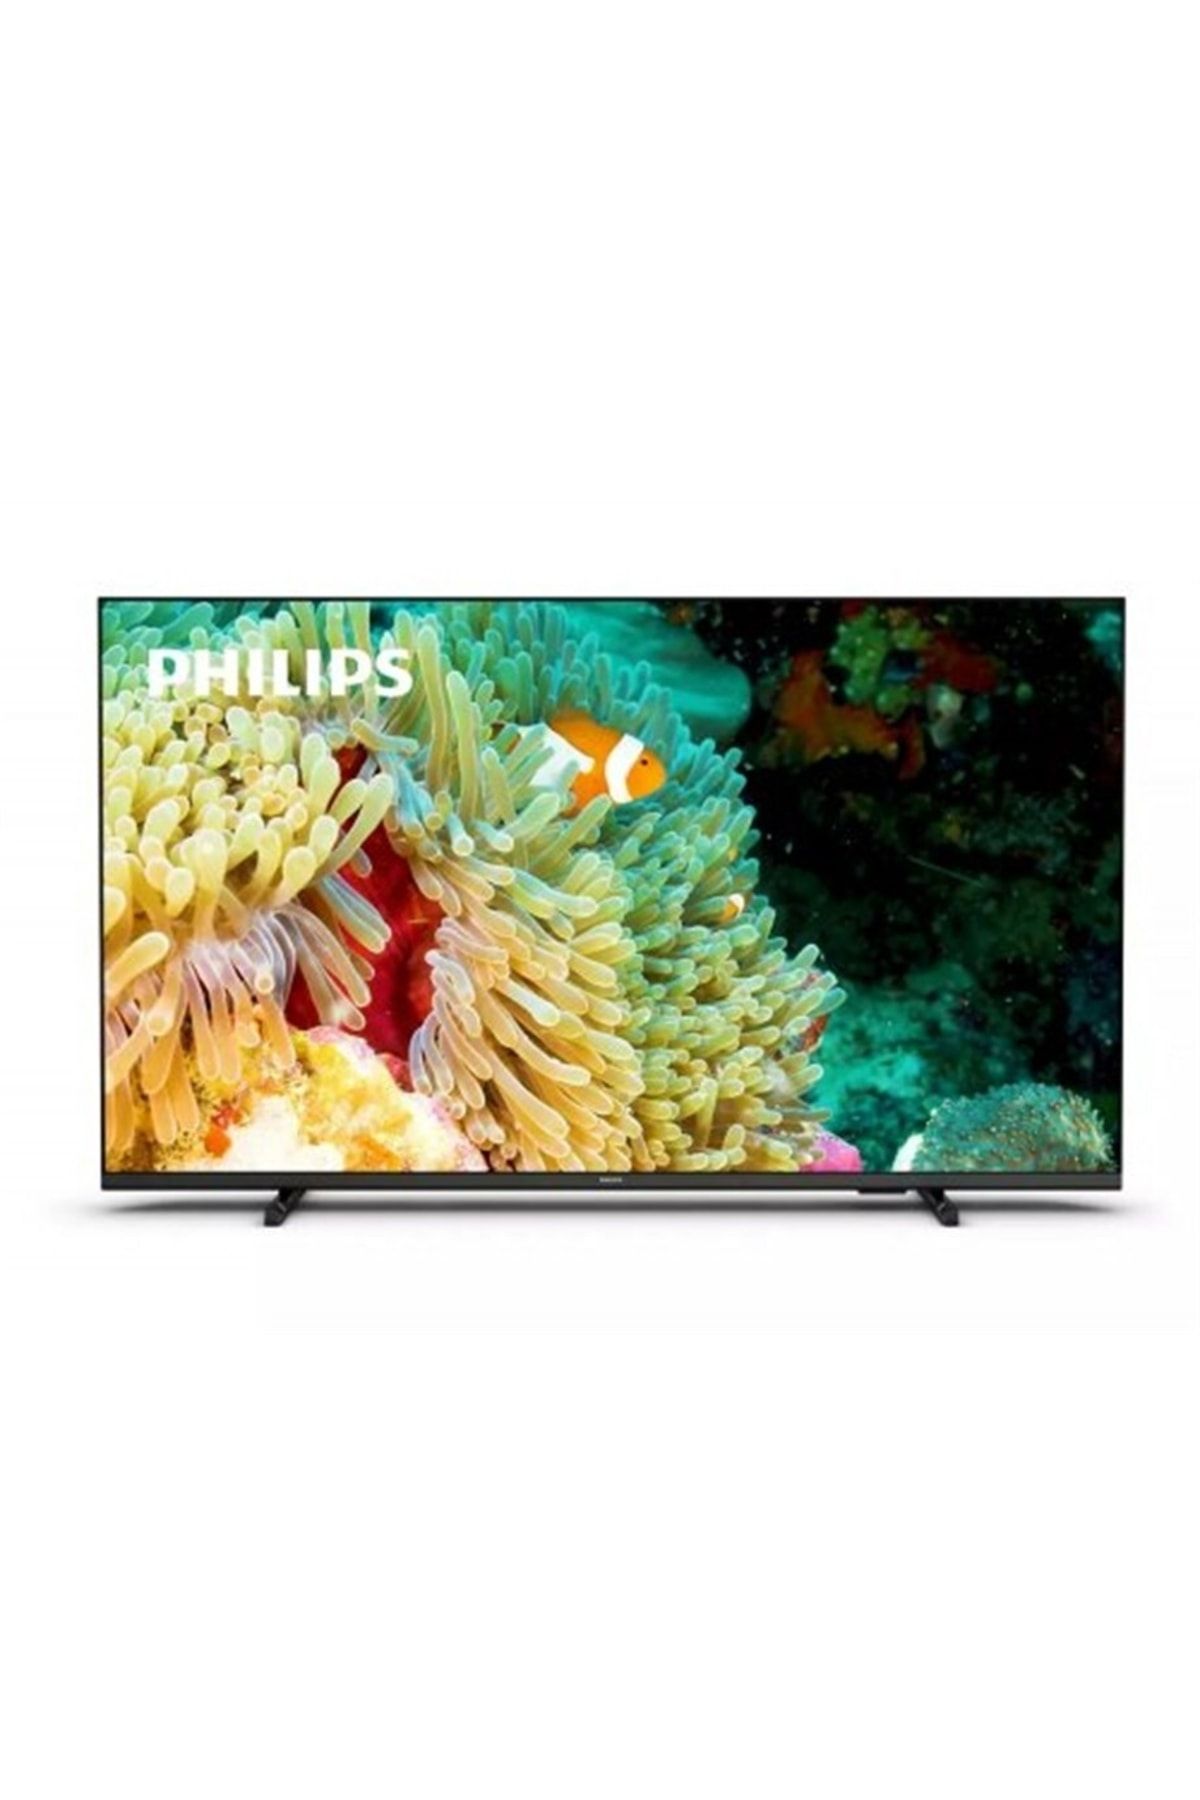 Philips 50pus7607 50" Smart Ultra Hd Tv